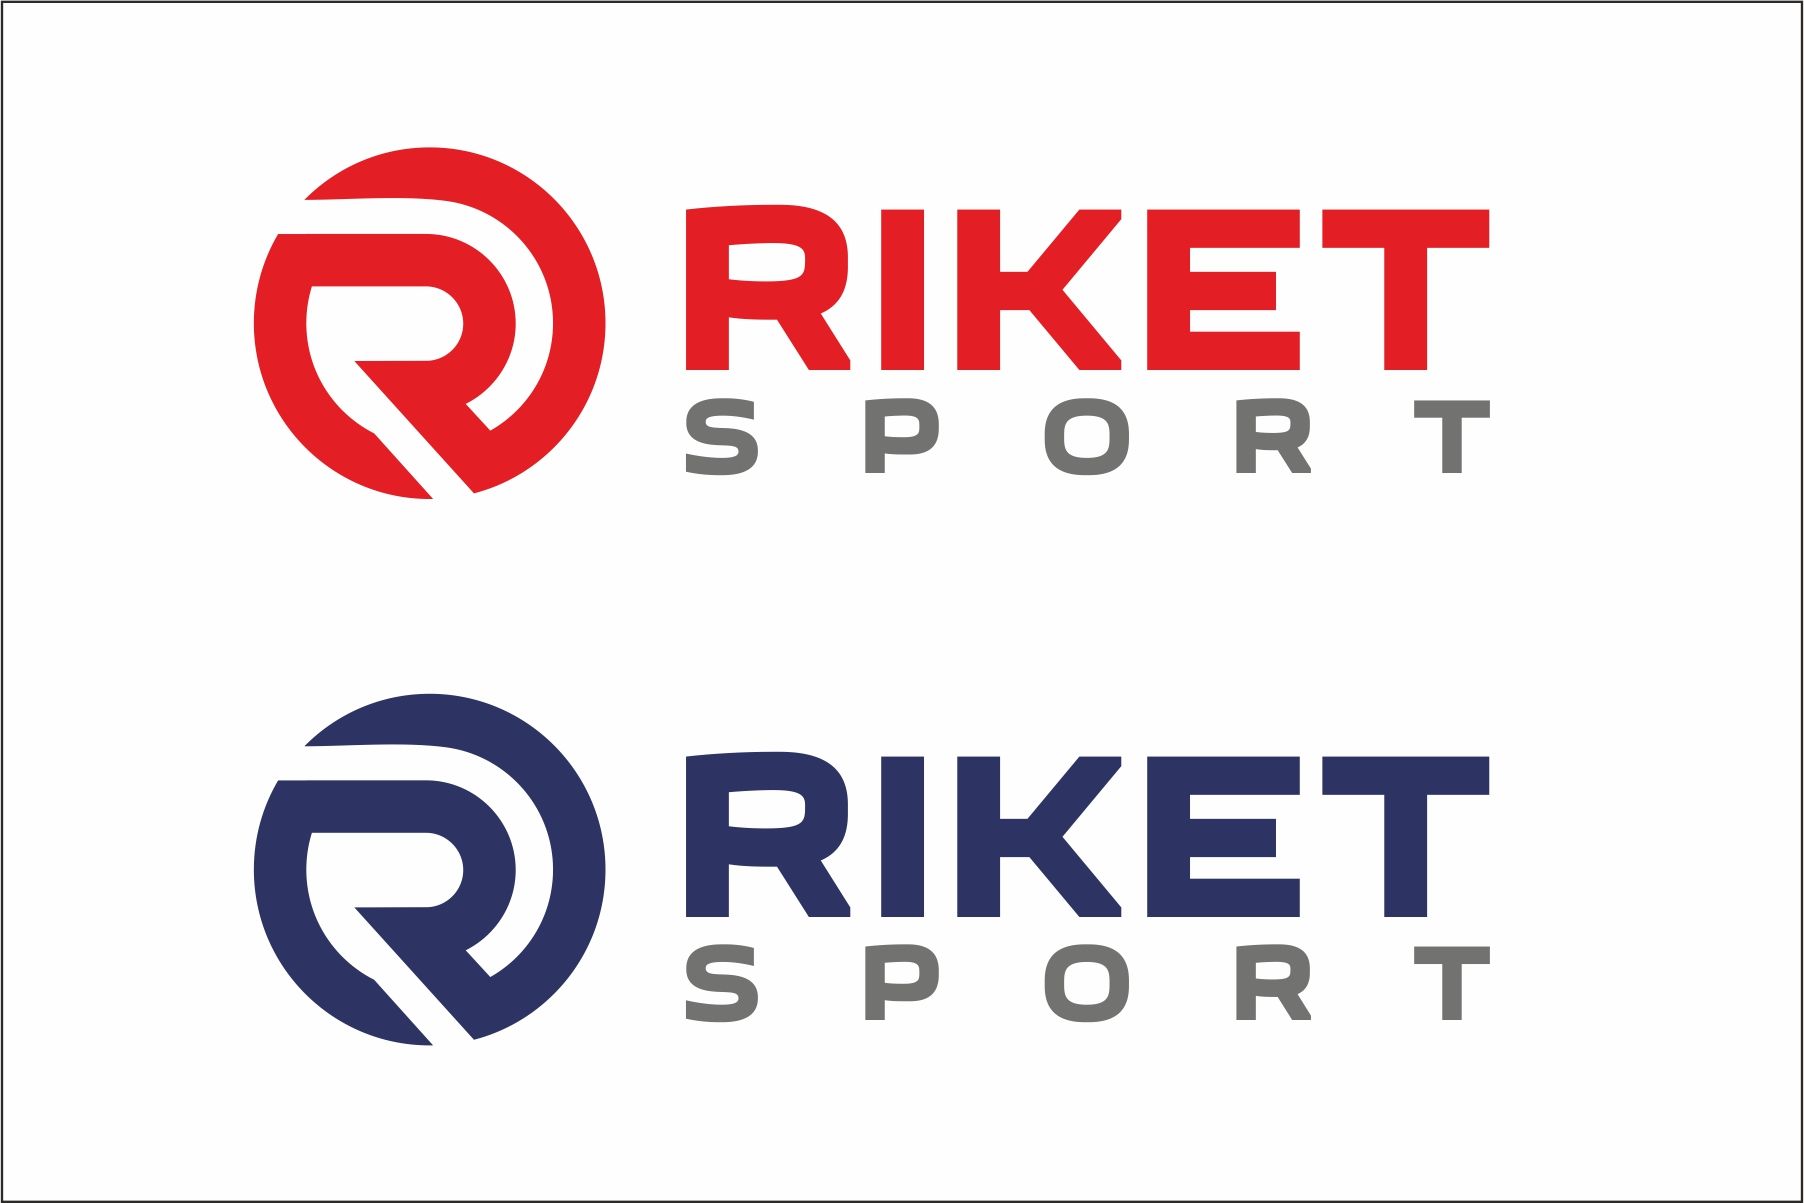 Логотип для Riket, riketsport, rikettravel - дизайнер kolchinviktor